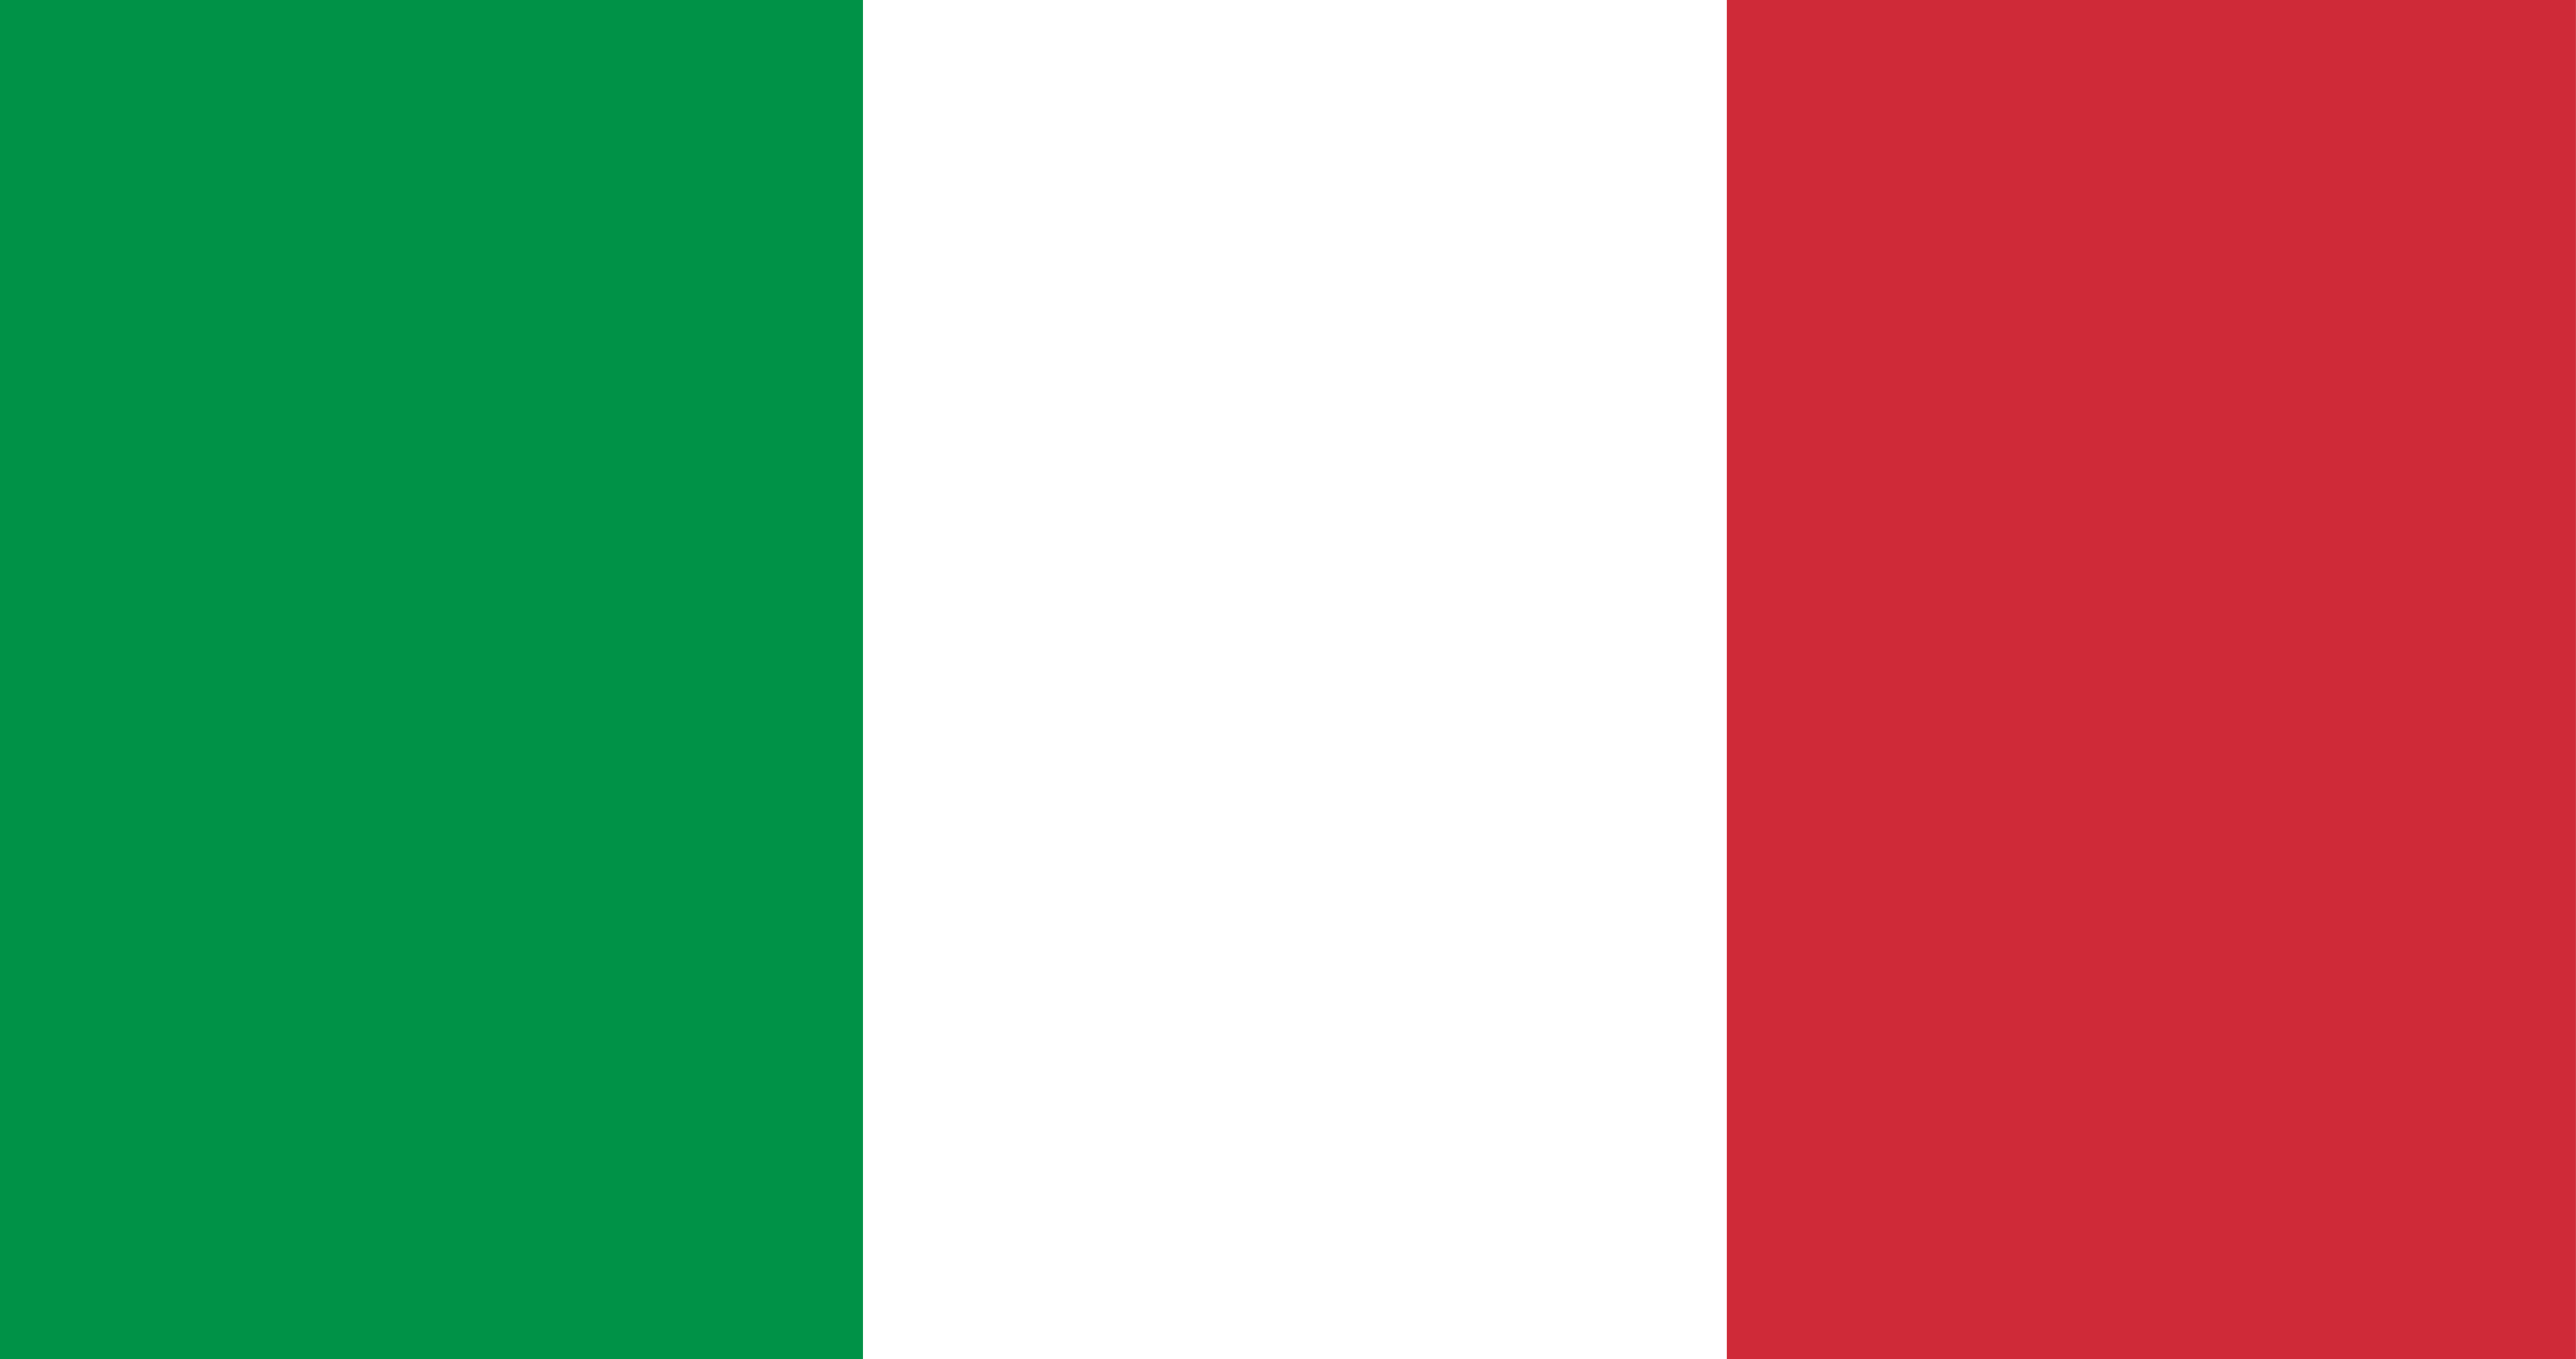 Italian language teachers